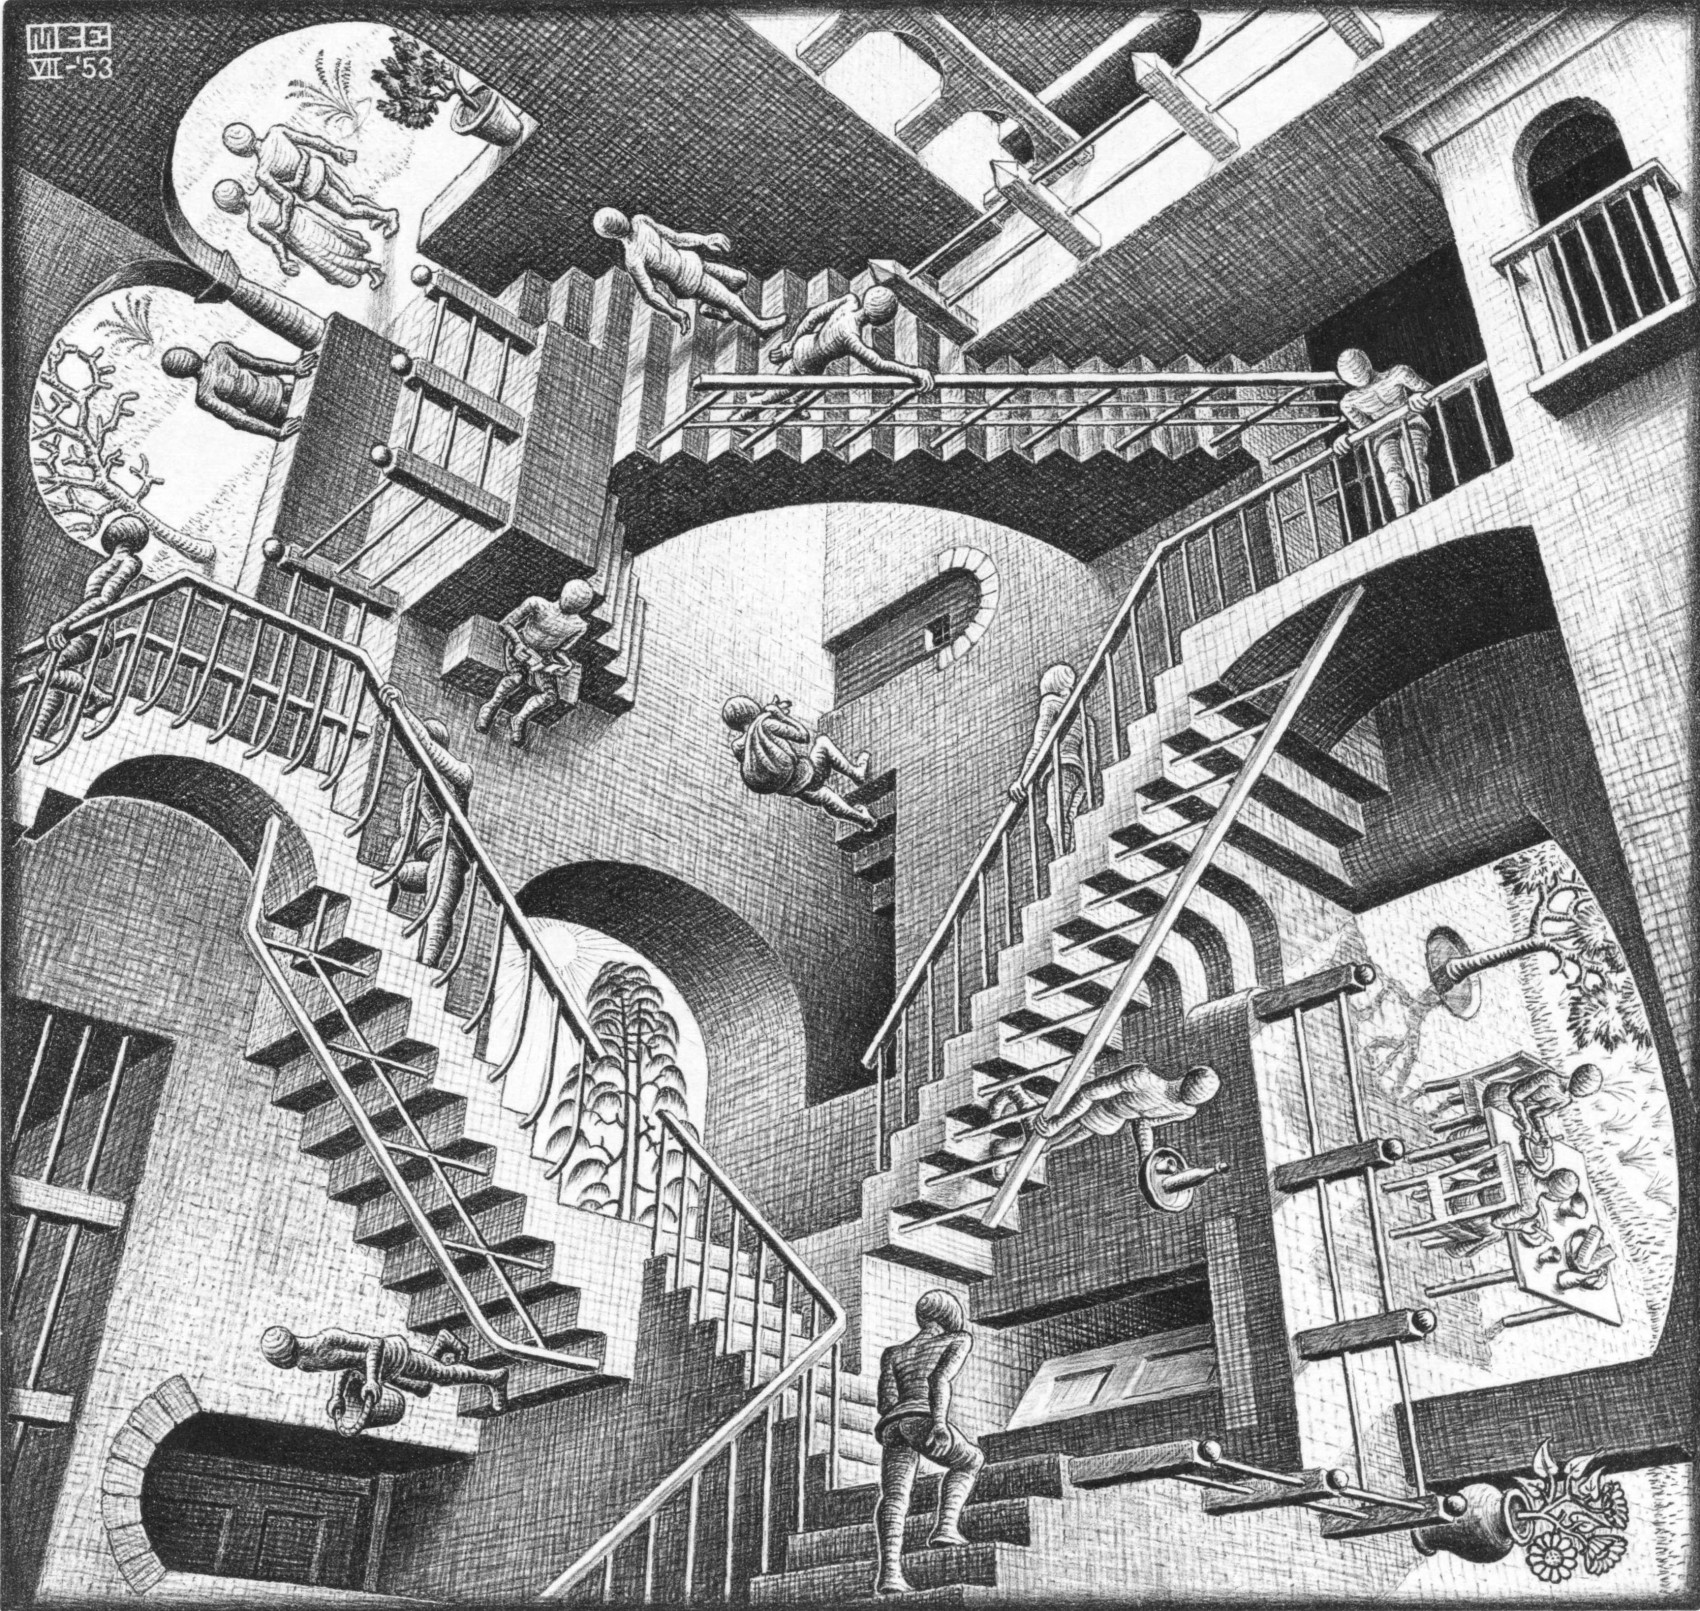 M.C. Escher Relativity (1953) ©National Gallery of Art, Washington, DC